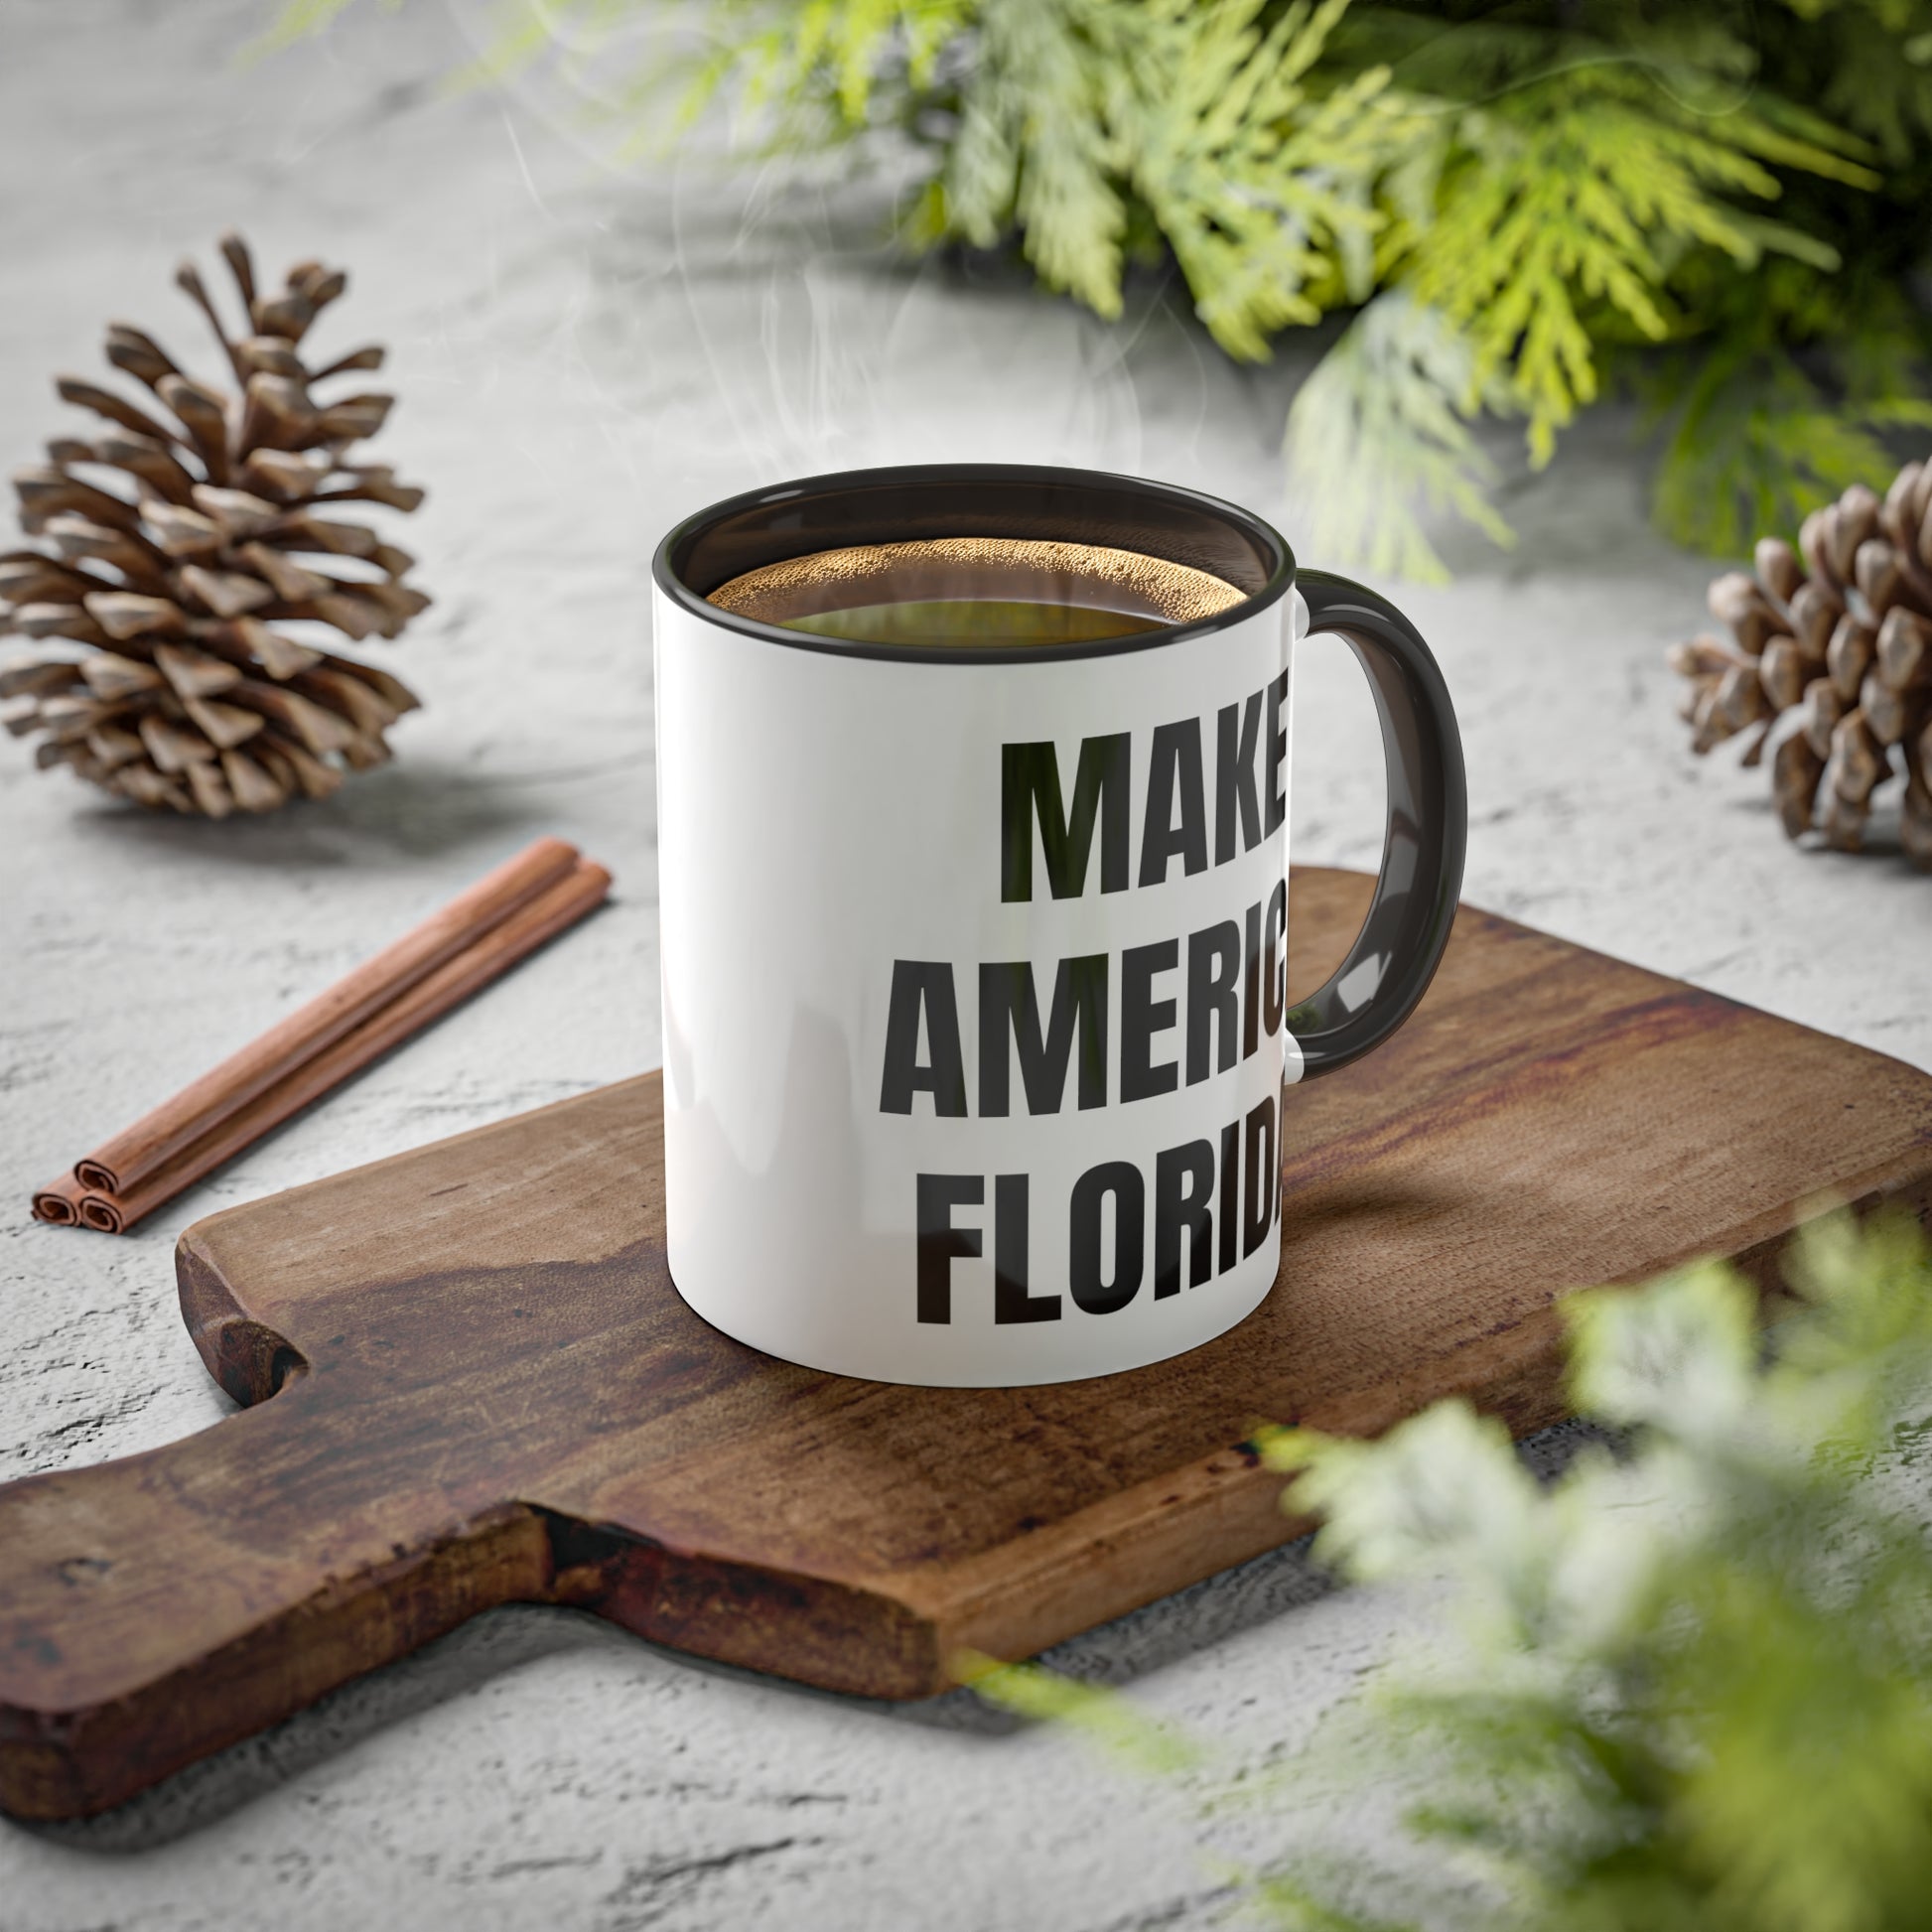 "Make America Florida" Funny Political Mug, Sarcastic Coffee Cup, Humorous Office Gift, Unique Statement Drinkware, USA Politics Humor - News For Reasonable People